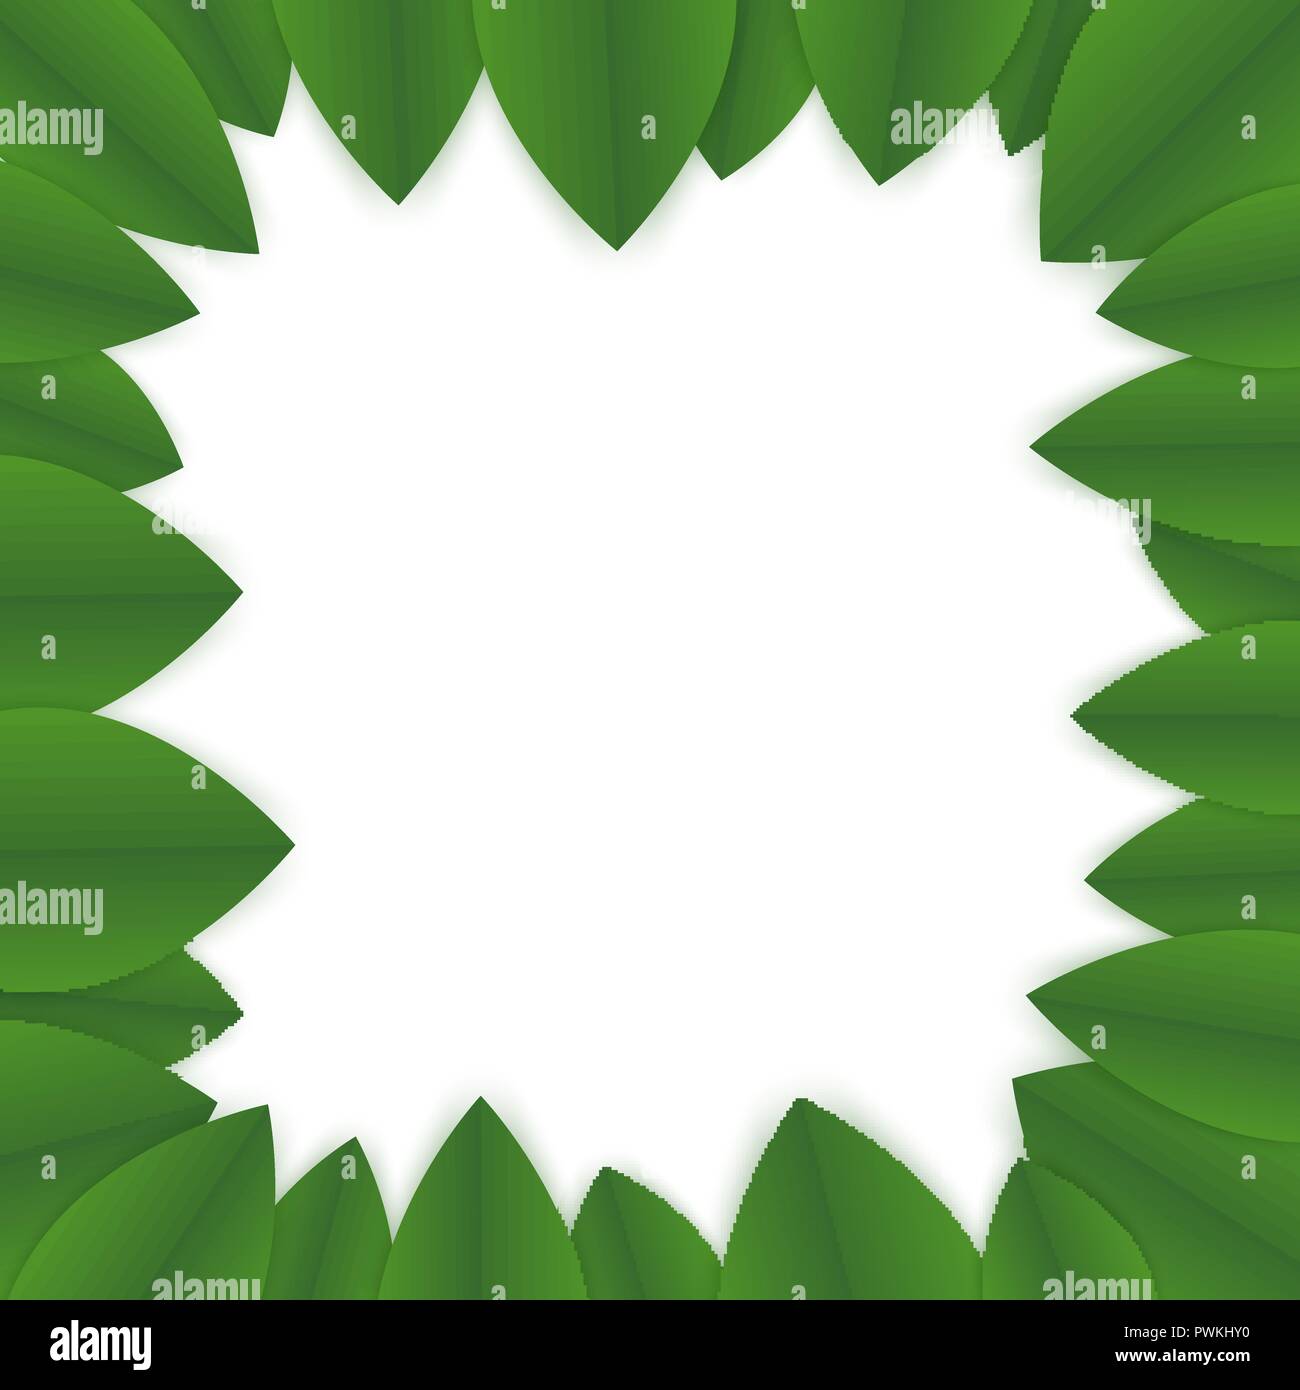 Download Free Terbaik Dari Green Banner Background Design Hd Erlie Decor SVG Cut Files